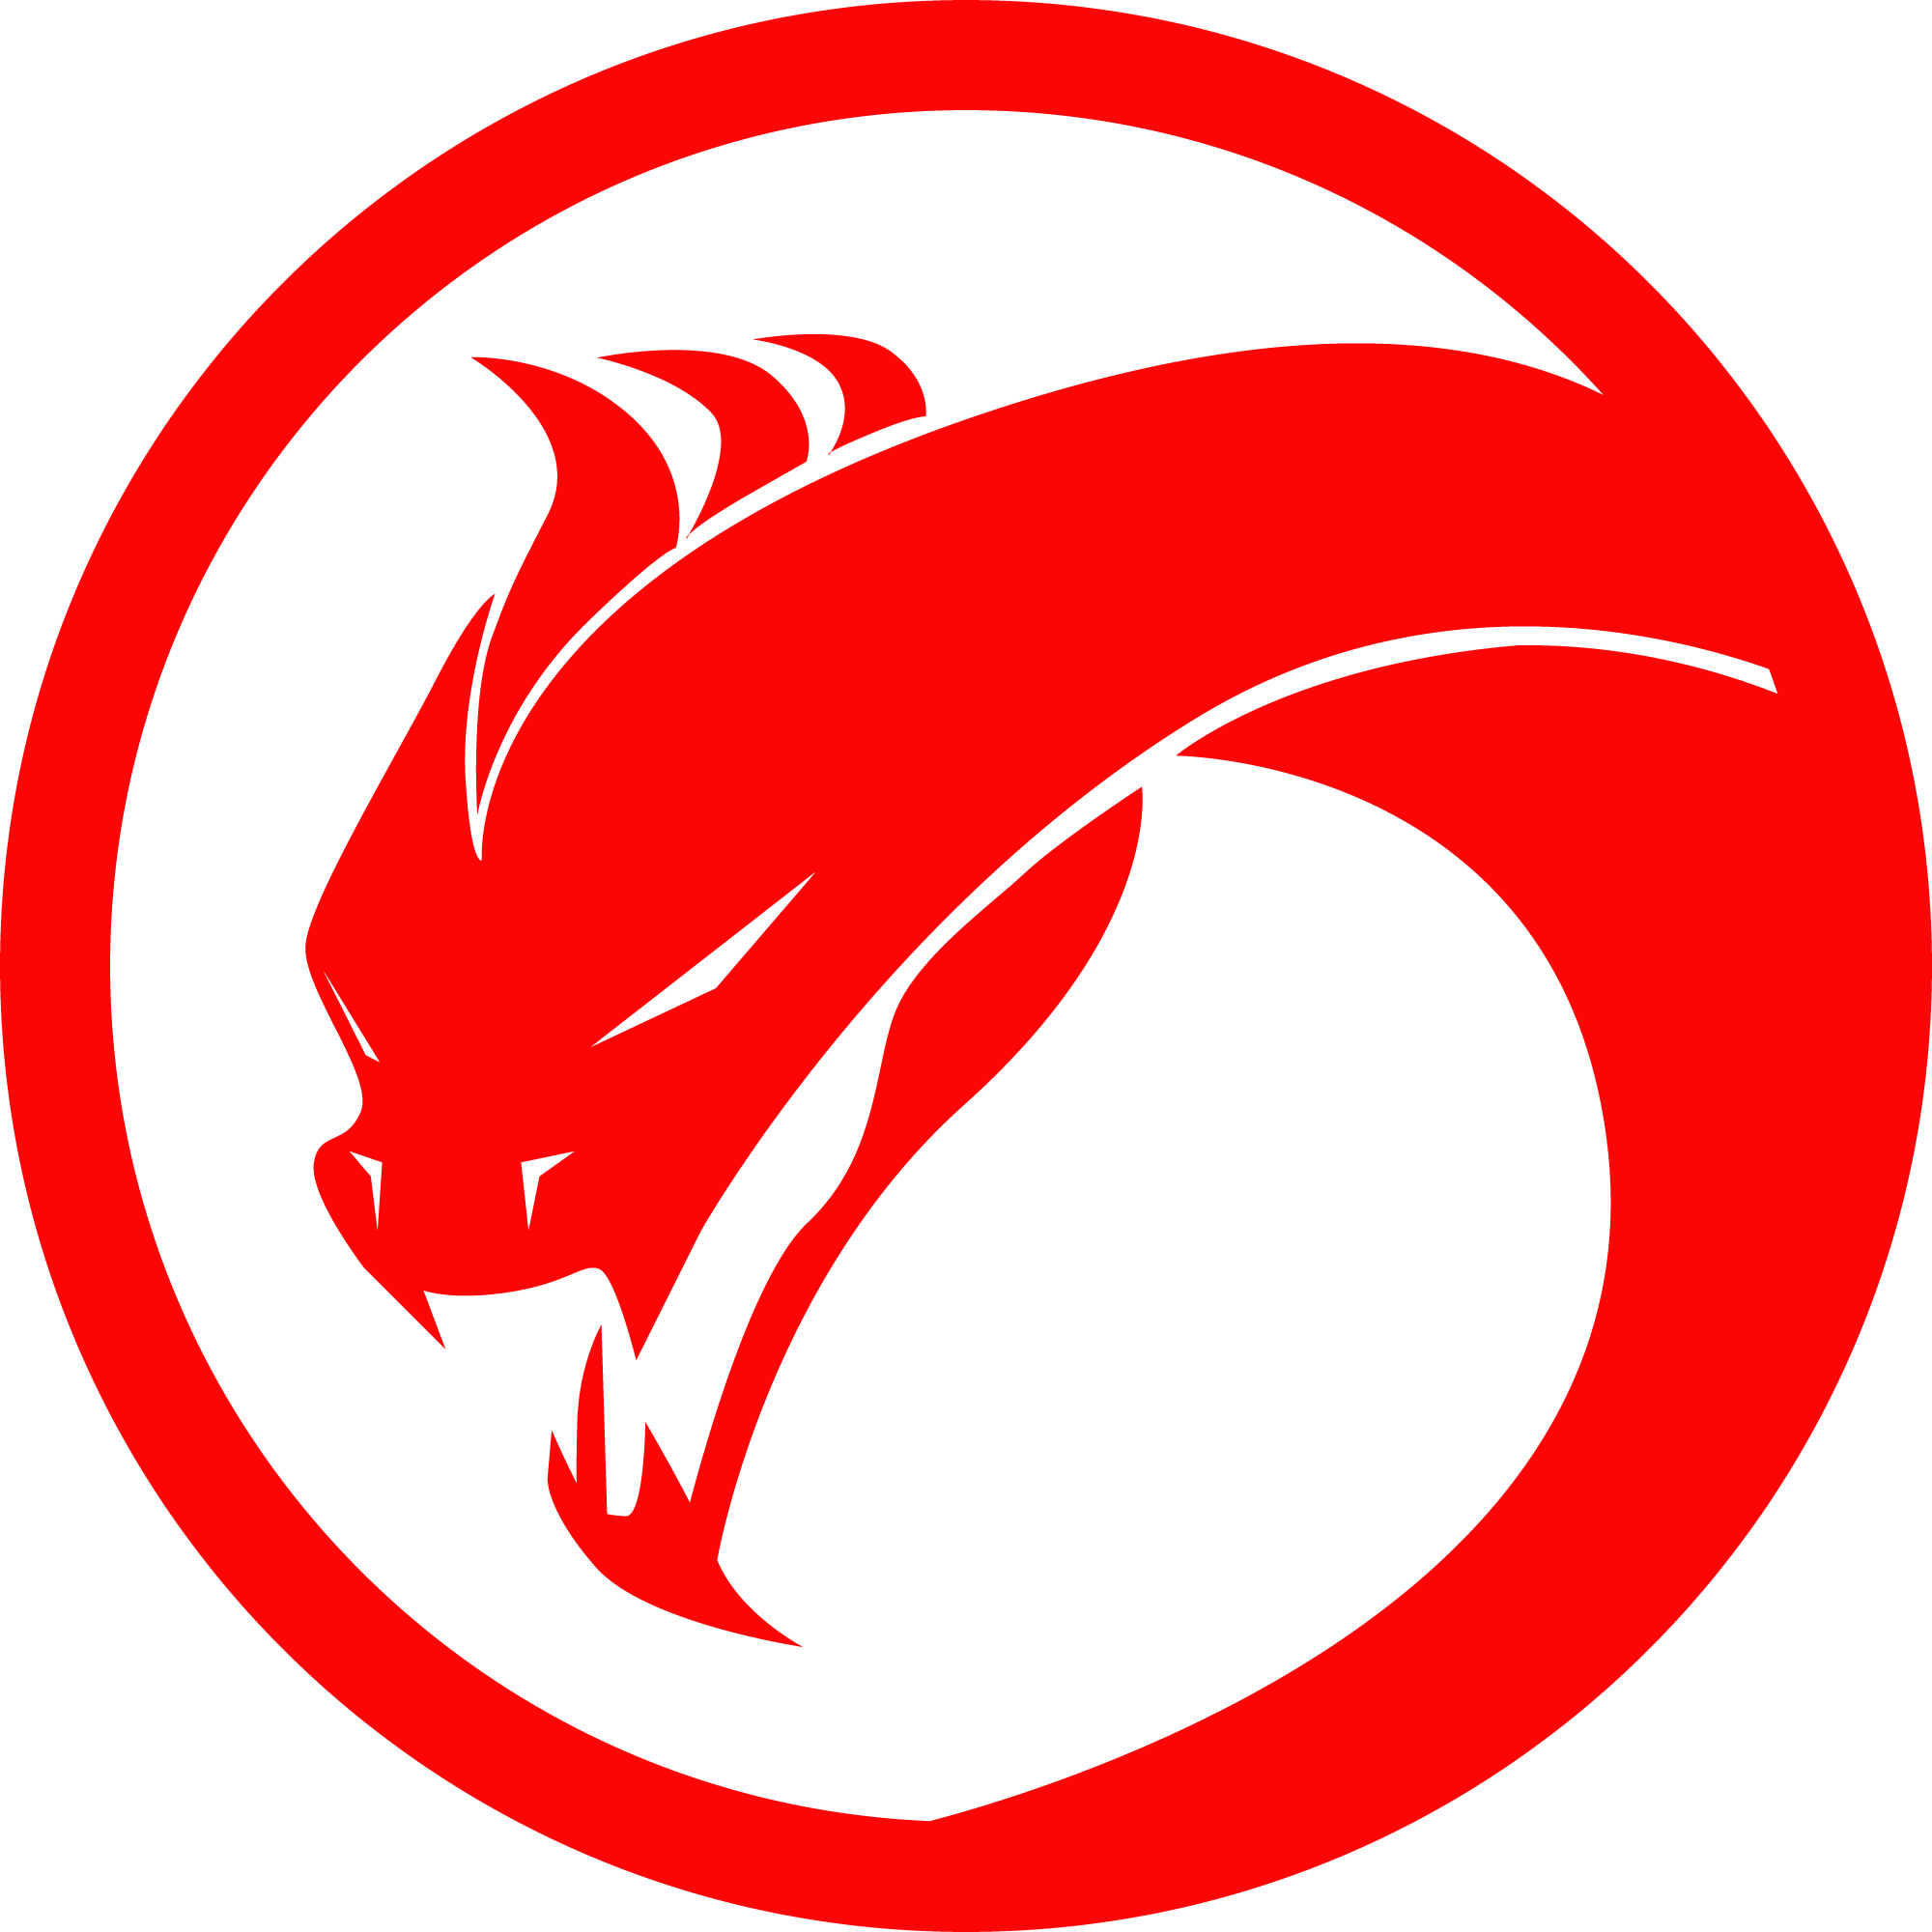 Red Dragon Logo